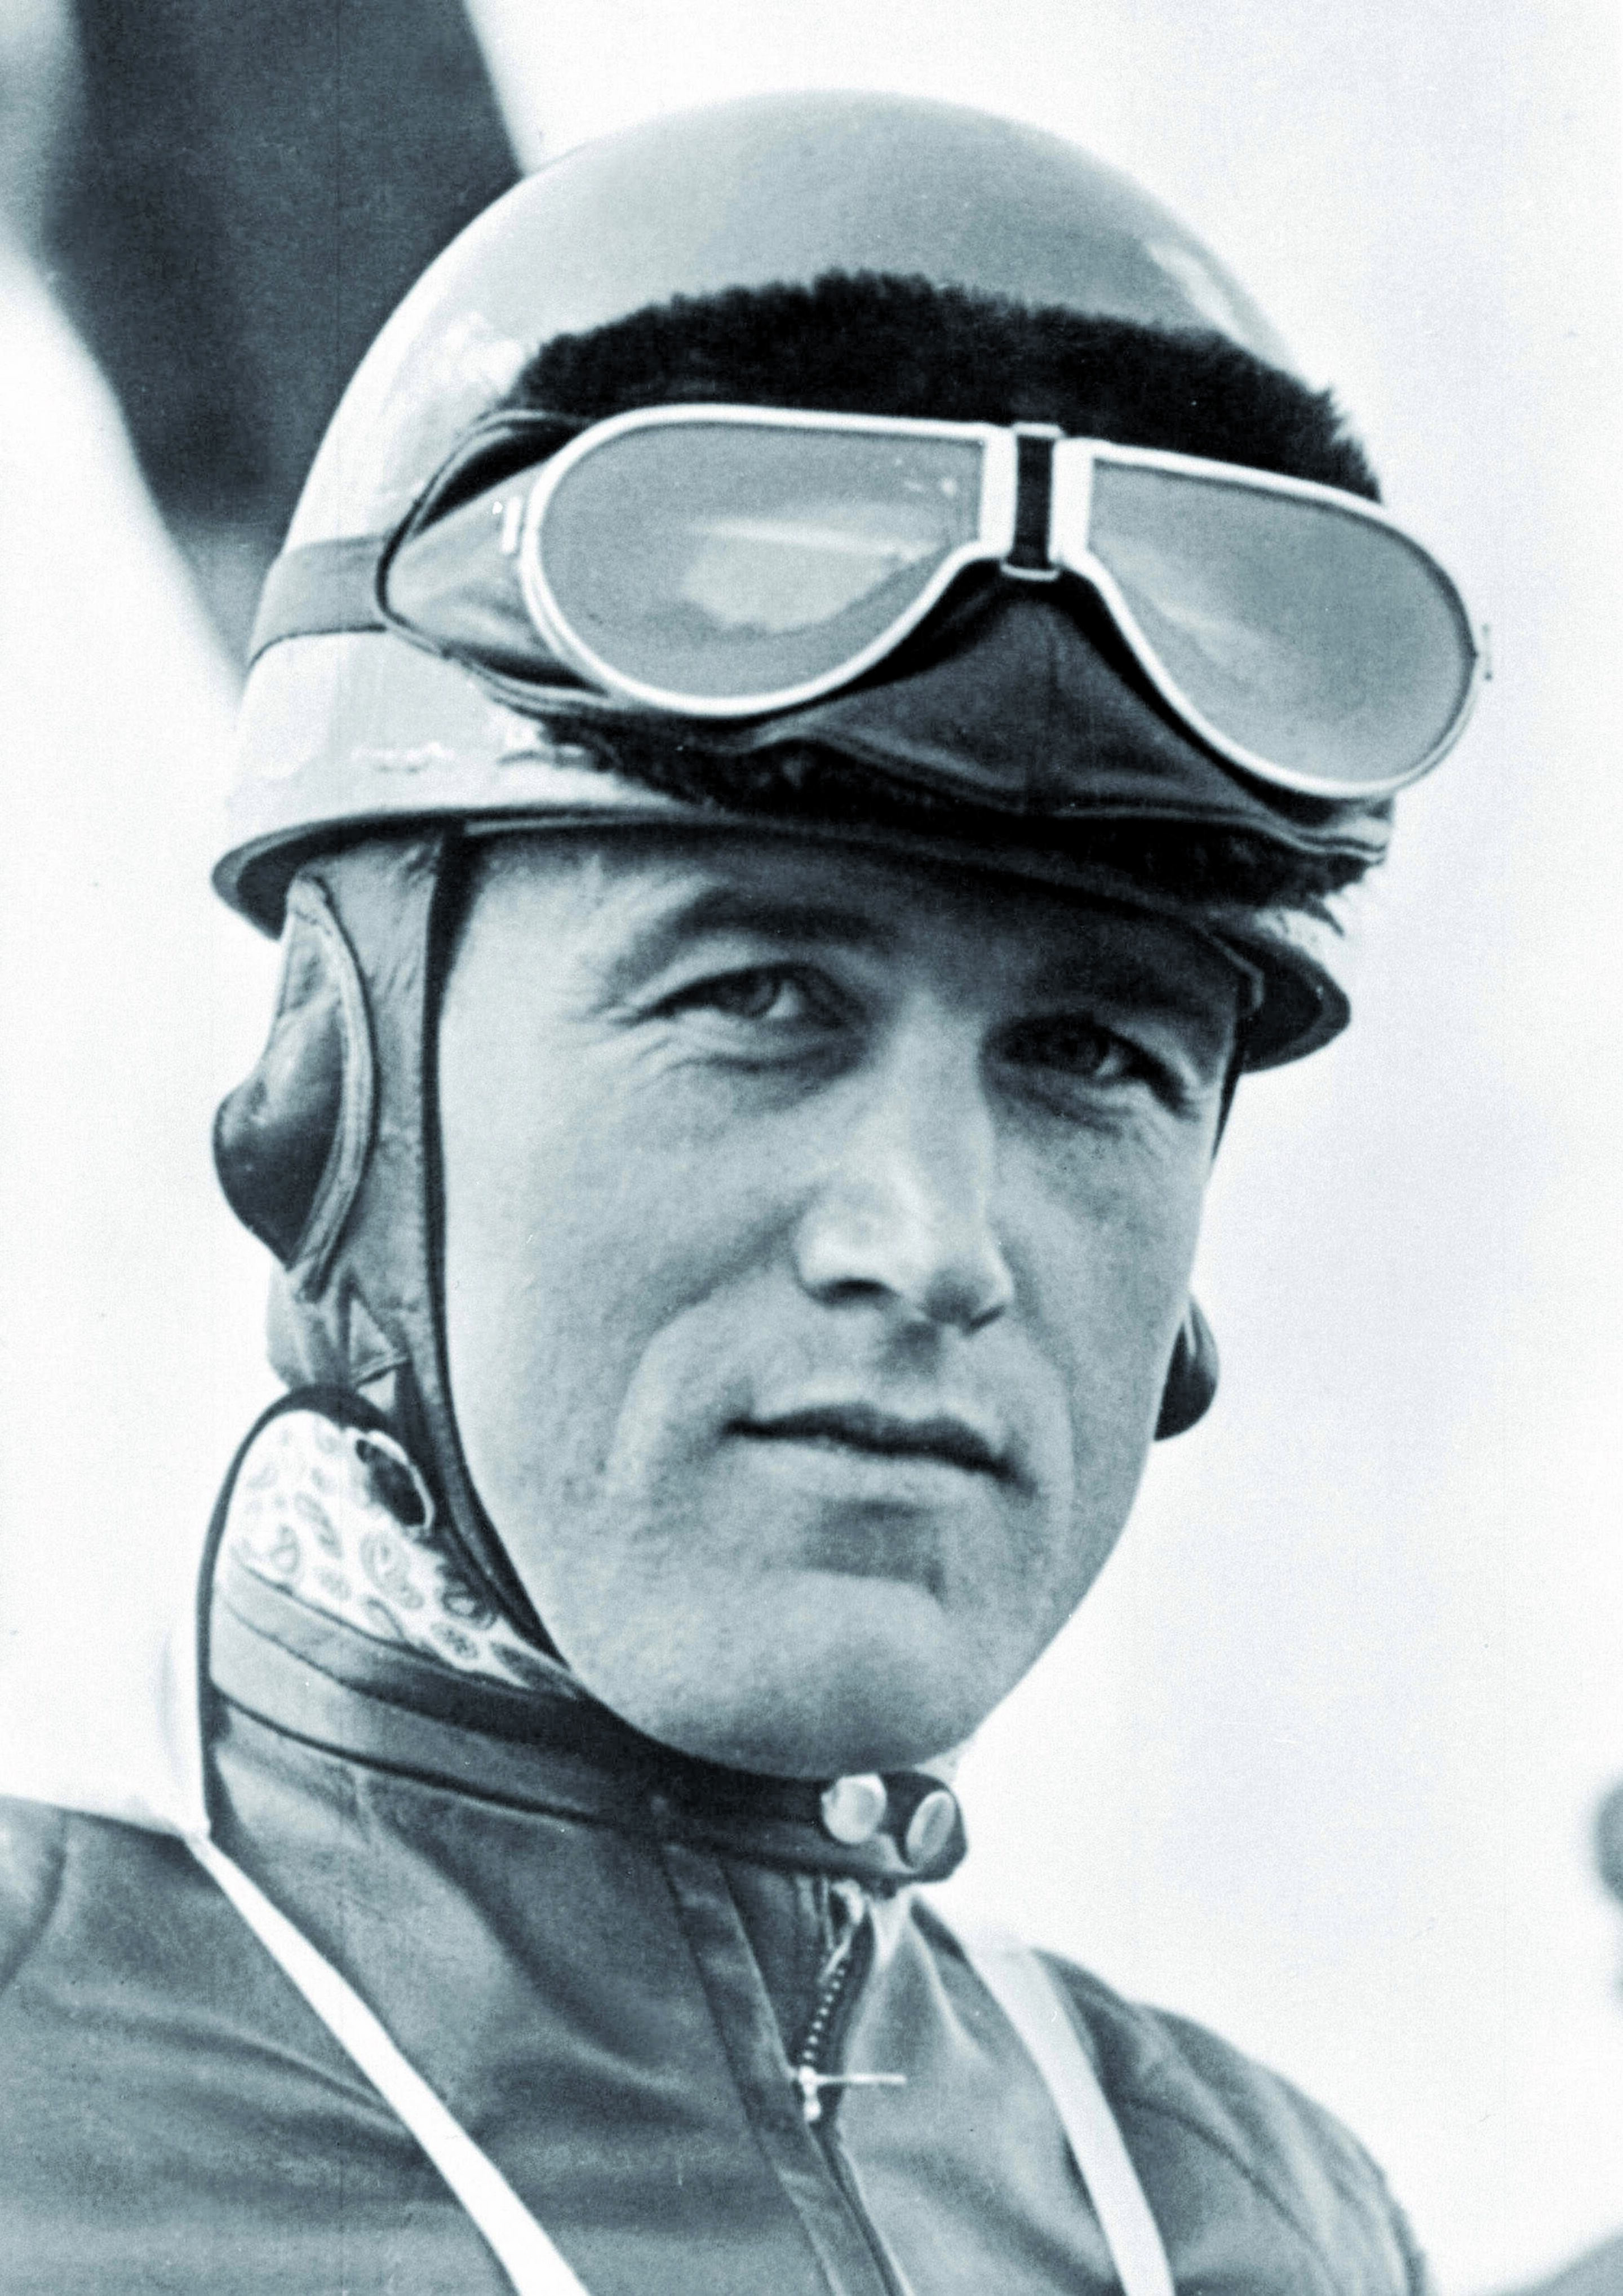 Centenary of racing legend Ewald Kluge’s birth